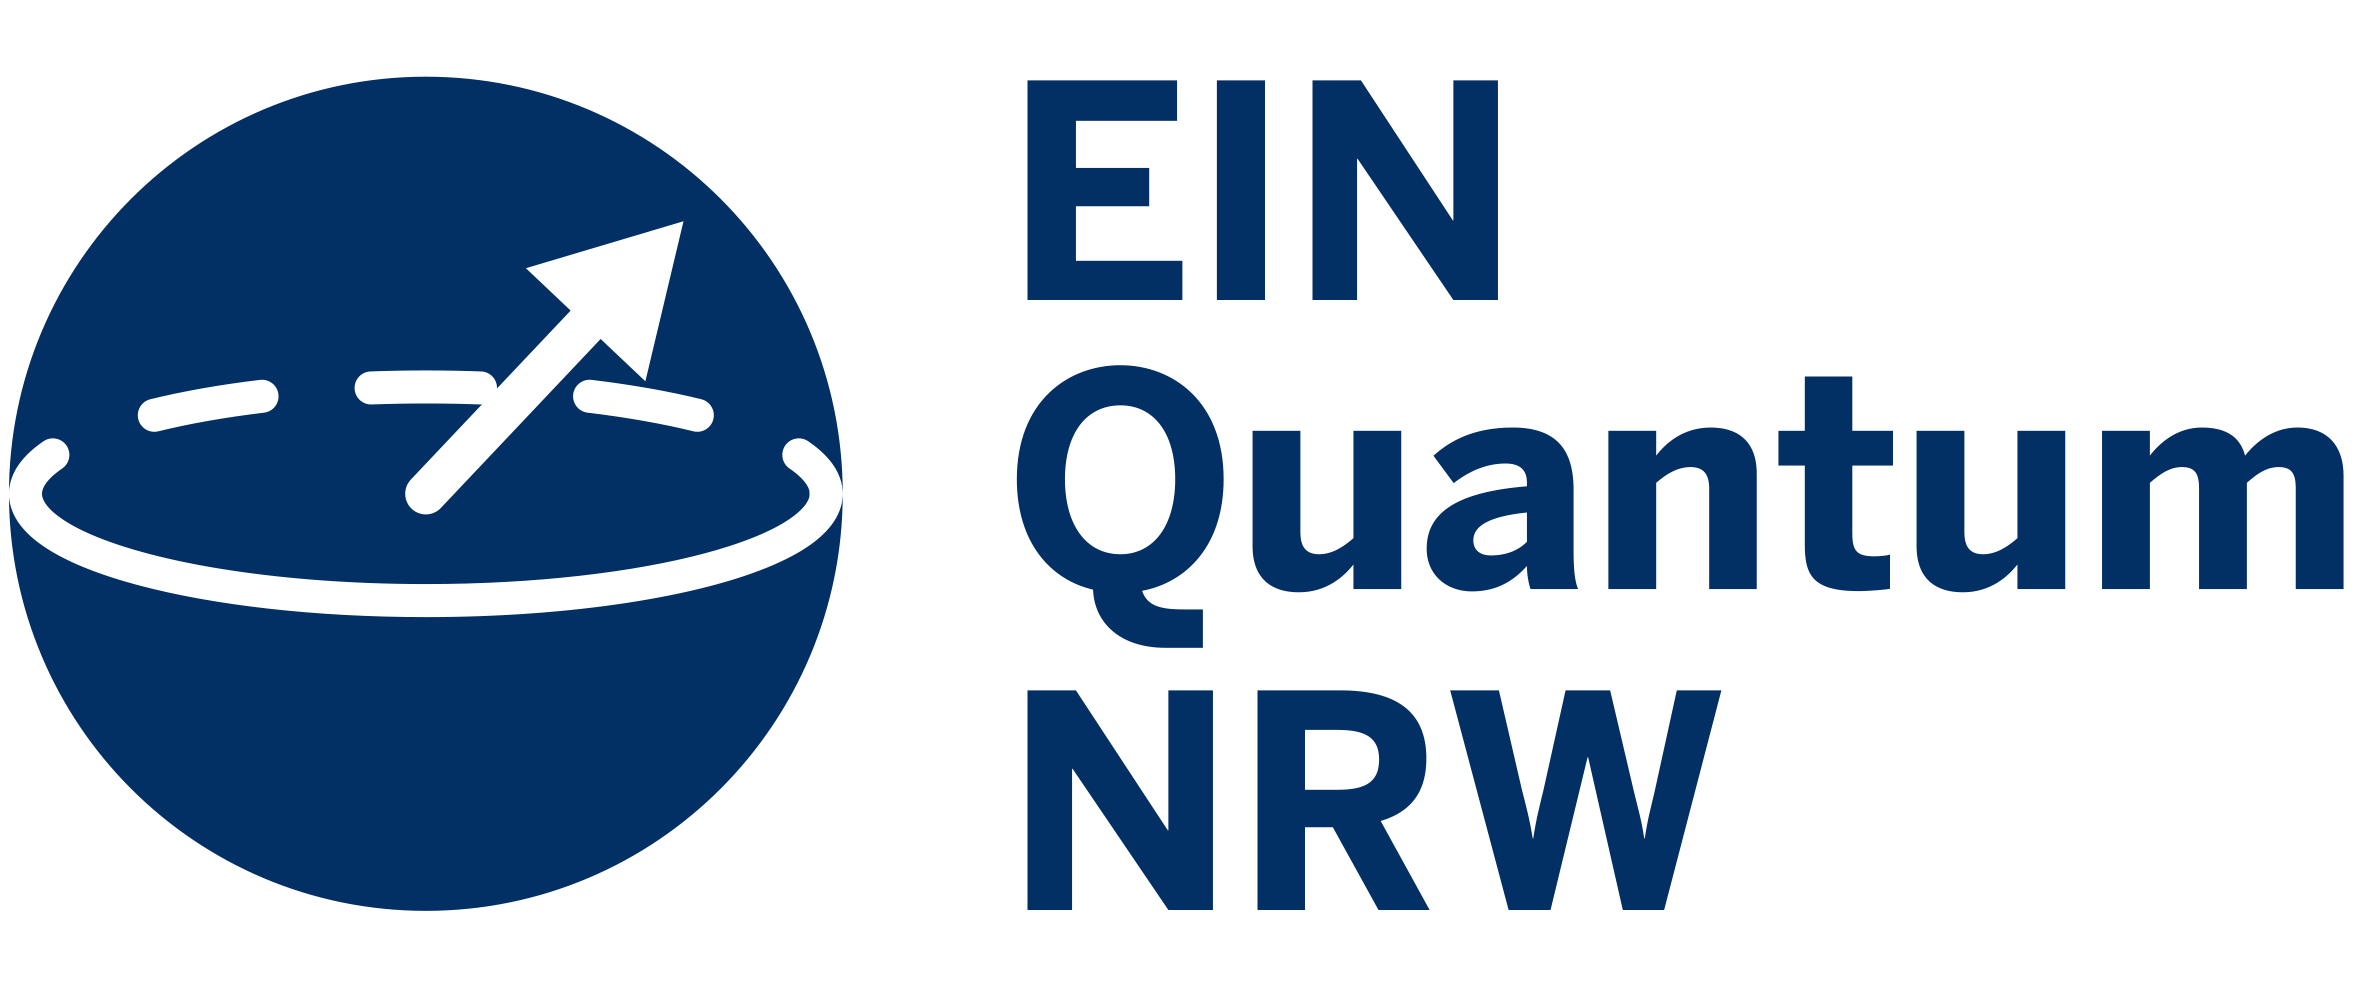 EIN Quantum NRW logo